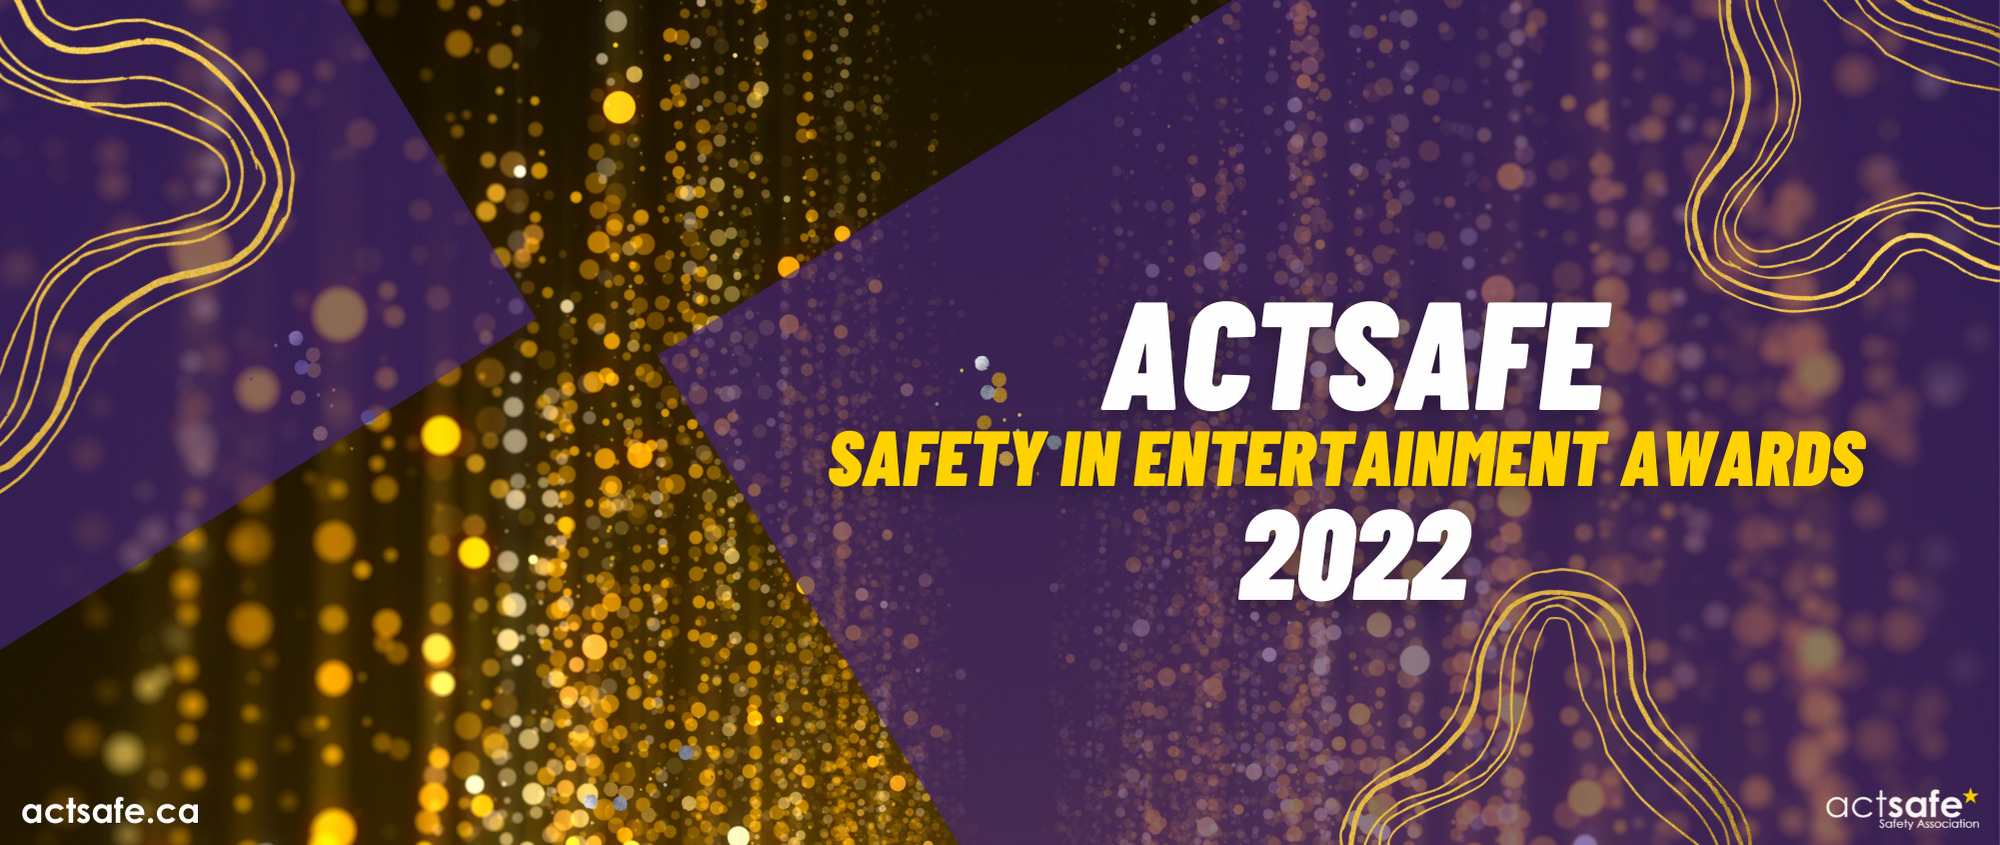 actsafe-safety-entertainment-awards_2022